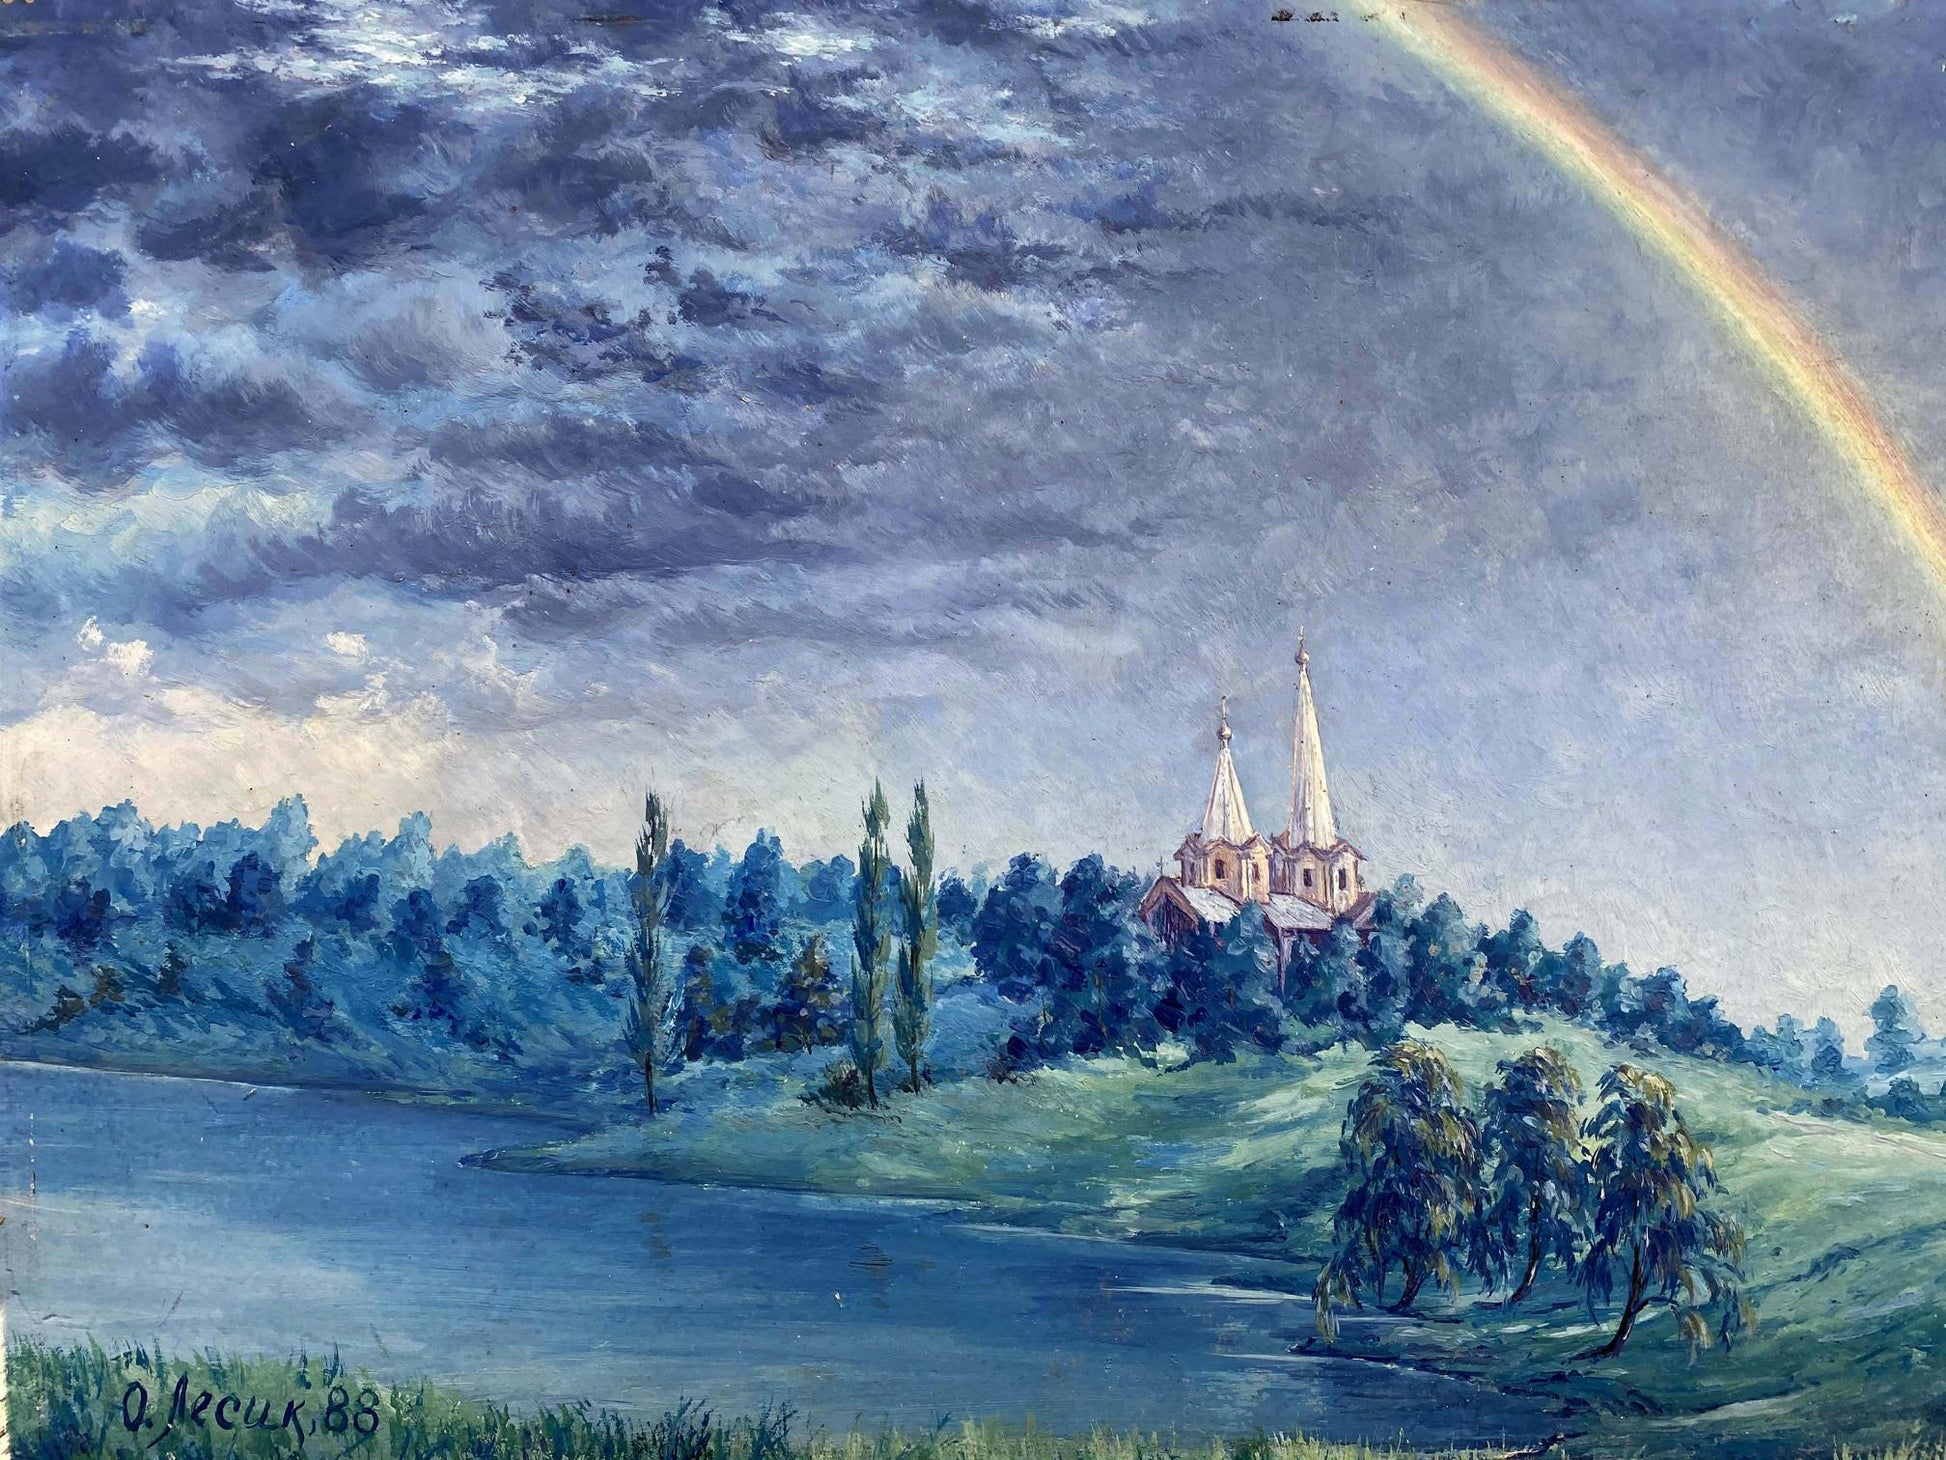 In Alexander Vladimirovich Lesik's oil portrayal, a rainbow spans the horizon above the church